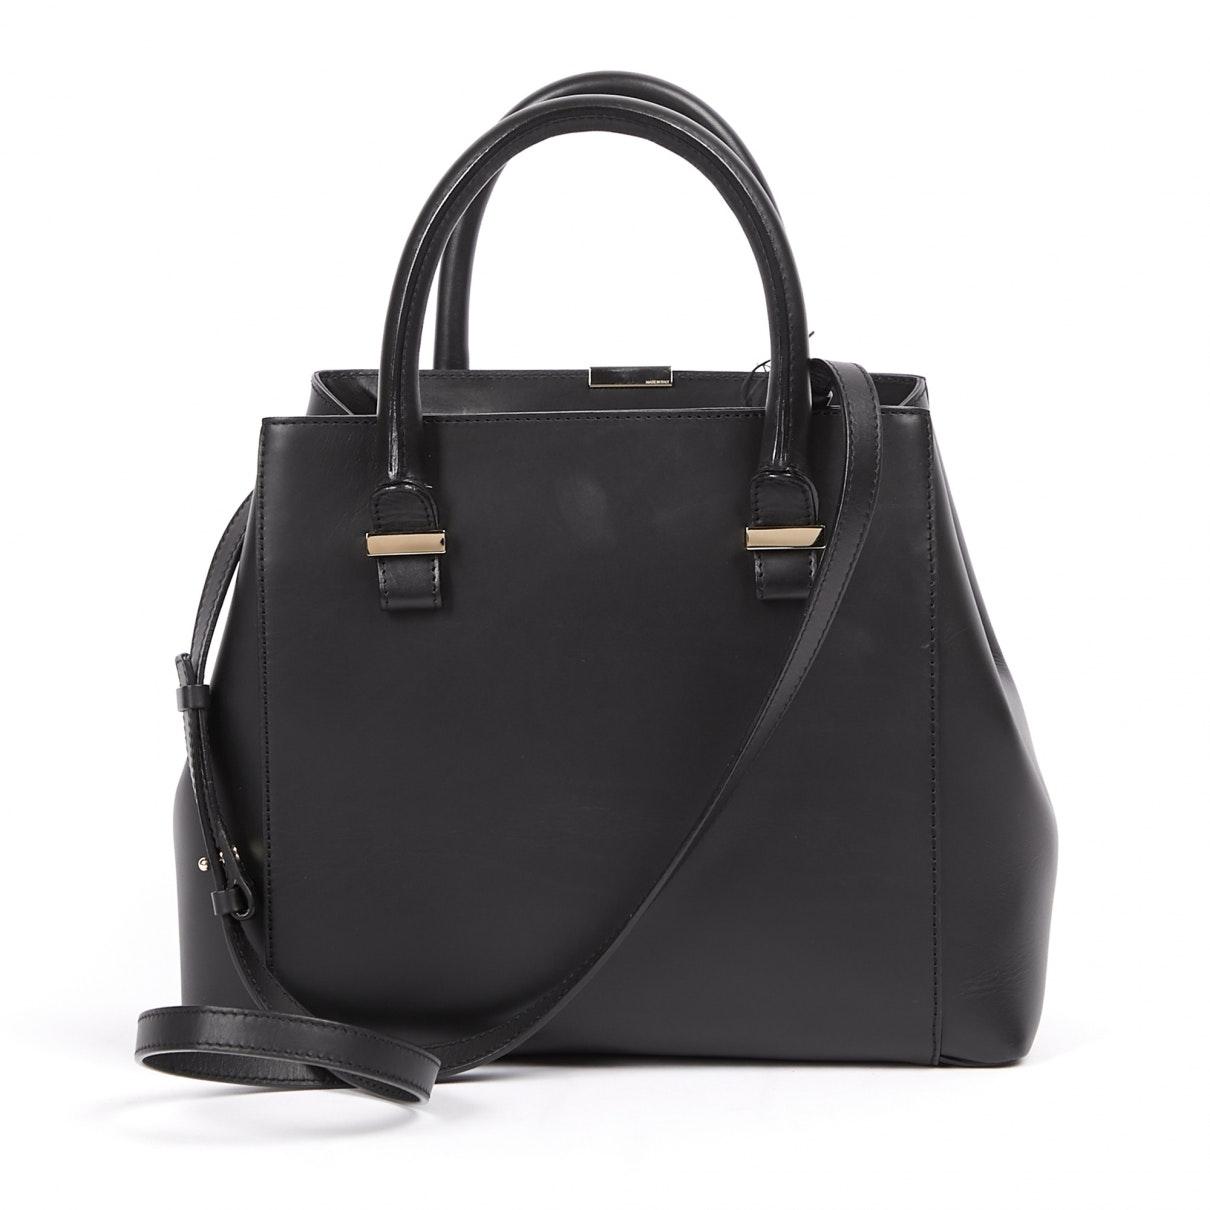 Victoria Beckham Quincy Black Leather Handbag - Lyst